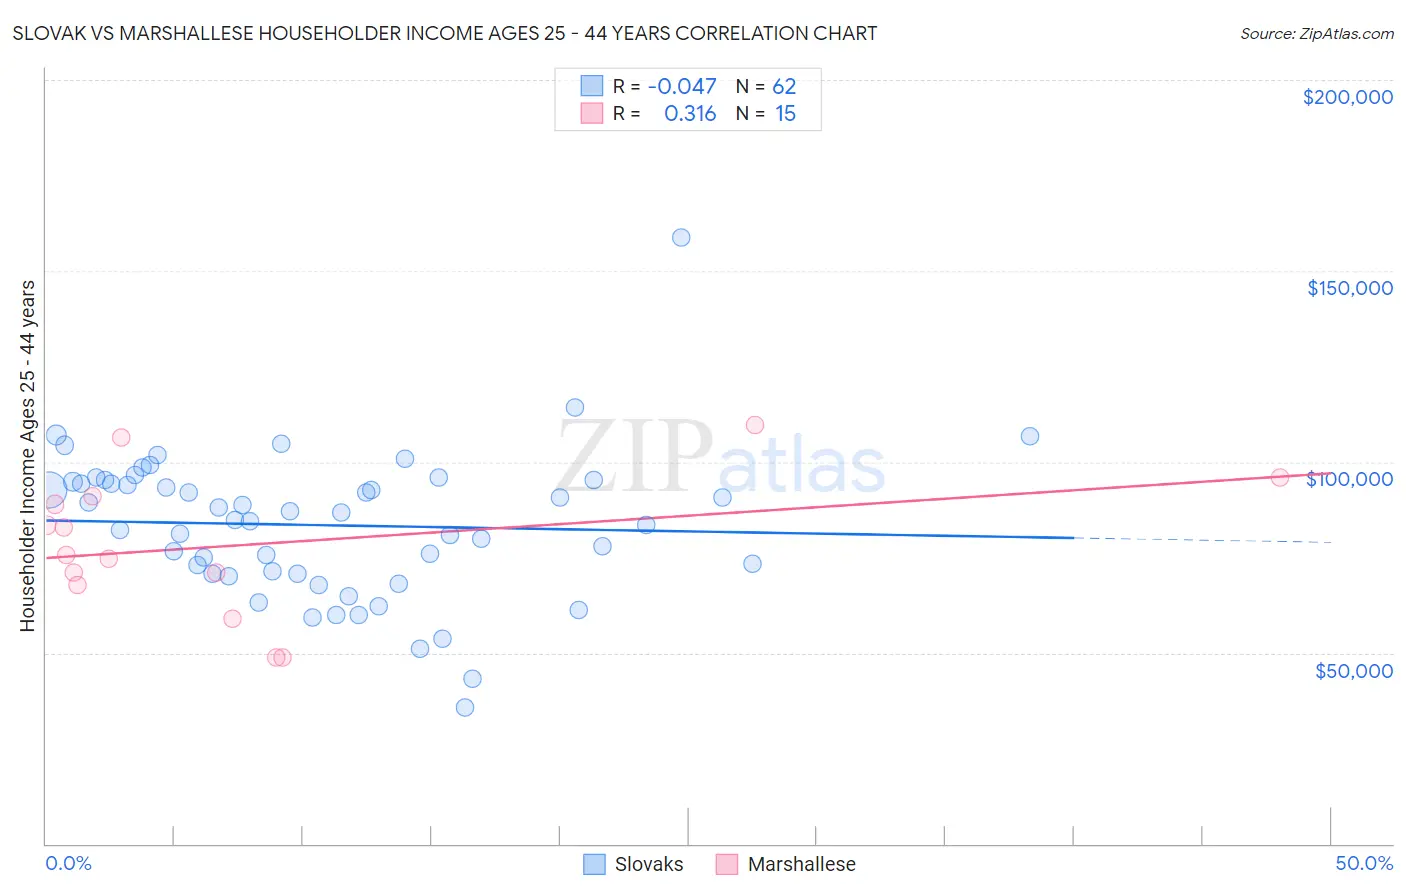 Slovak vs Marshallese Householder Income Ages 25 - 44 years